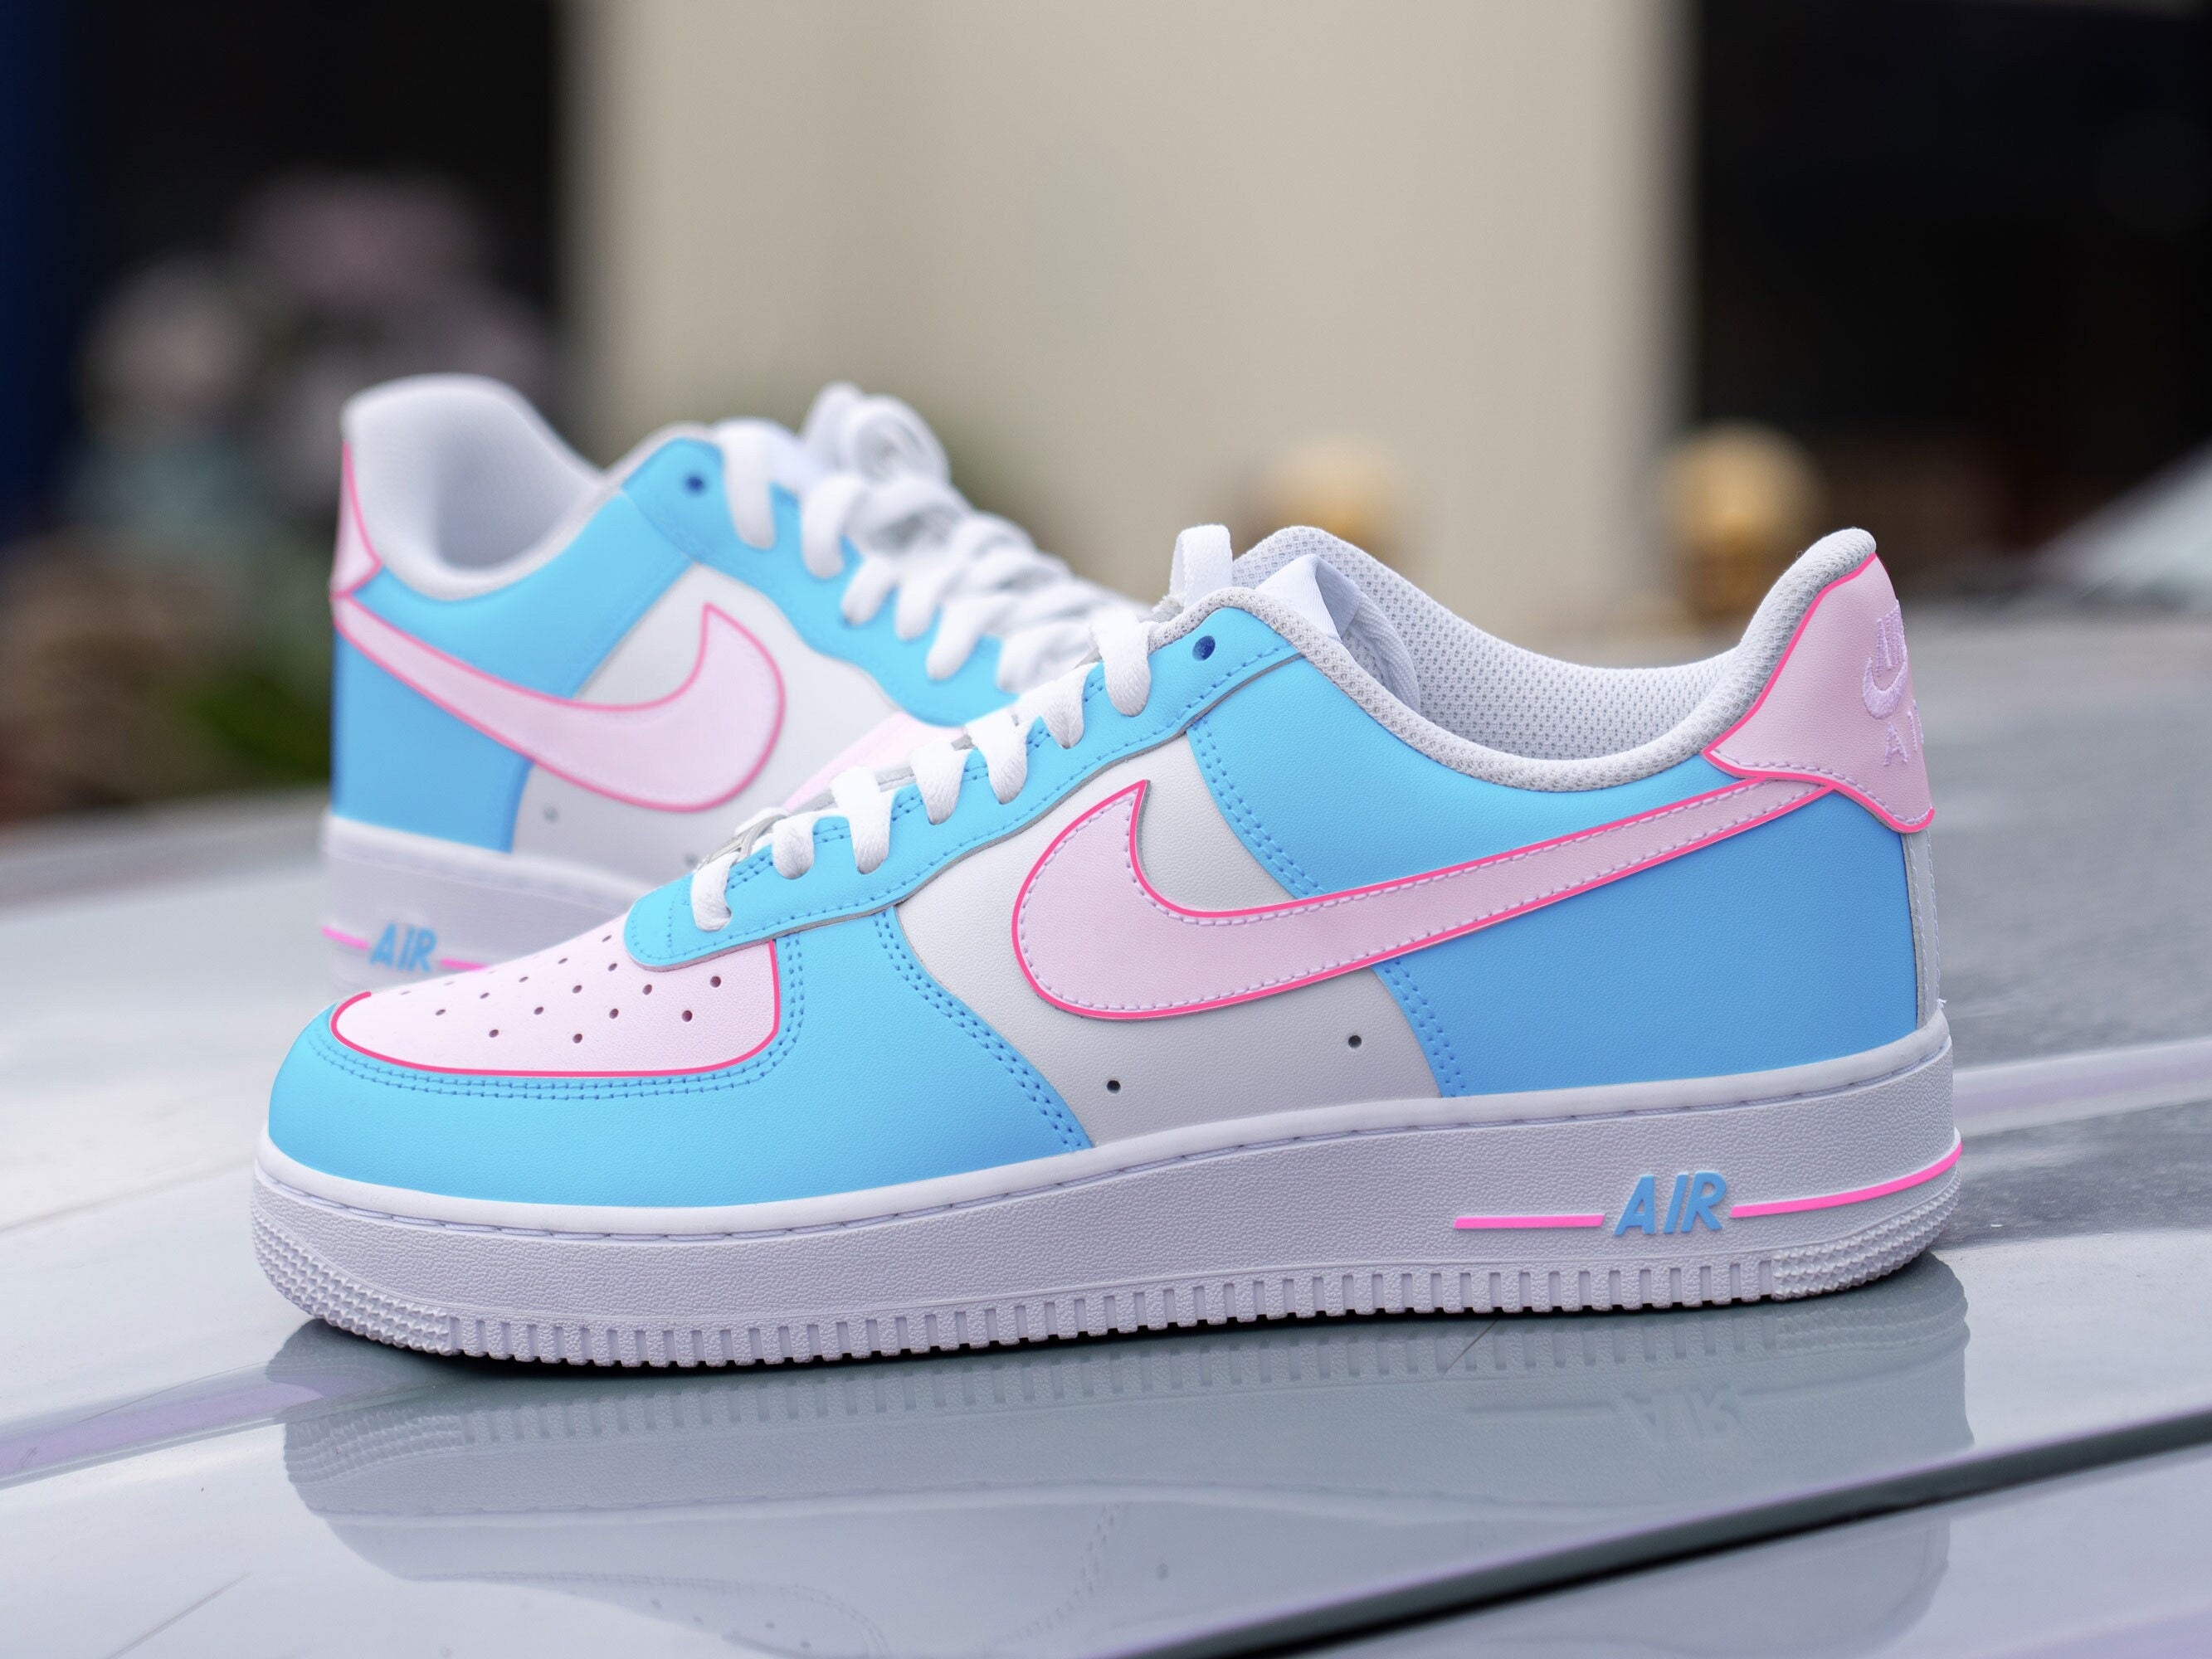 Custom Nike Air Force 1 Pink and Blue